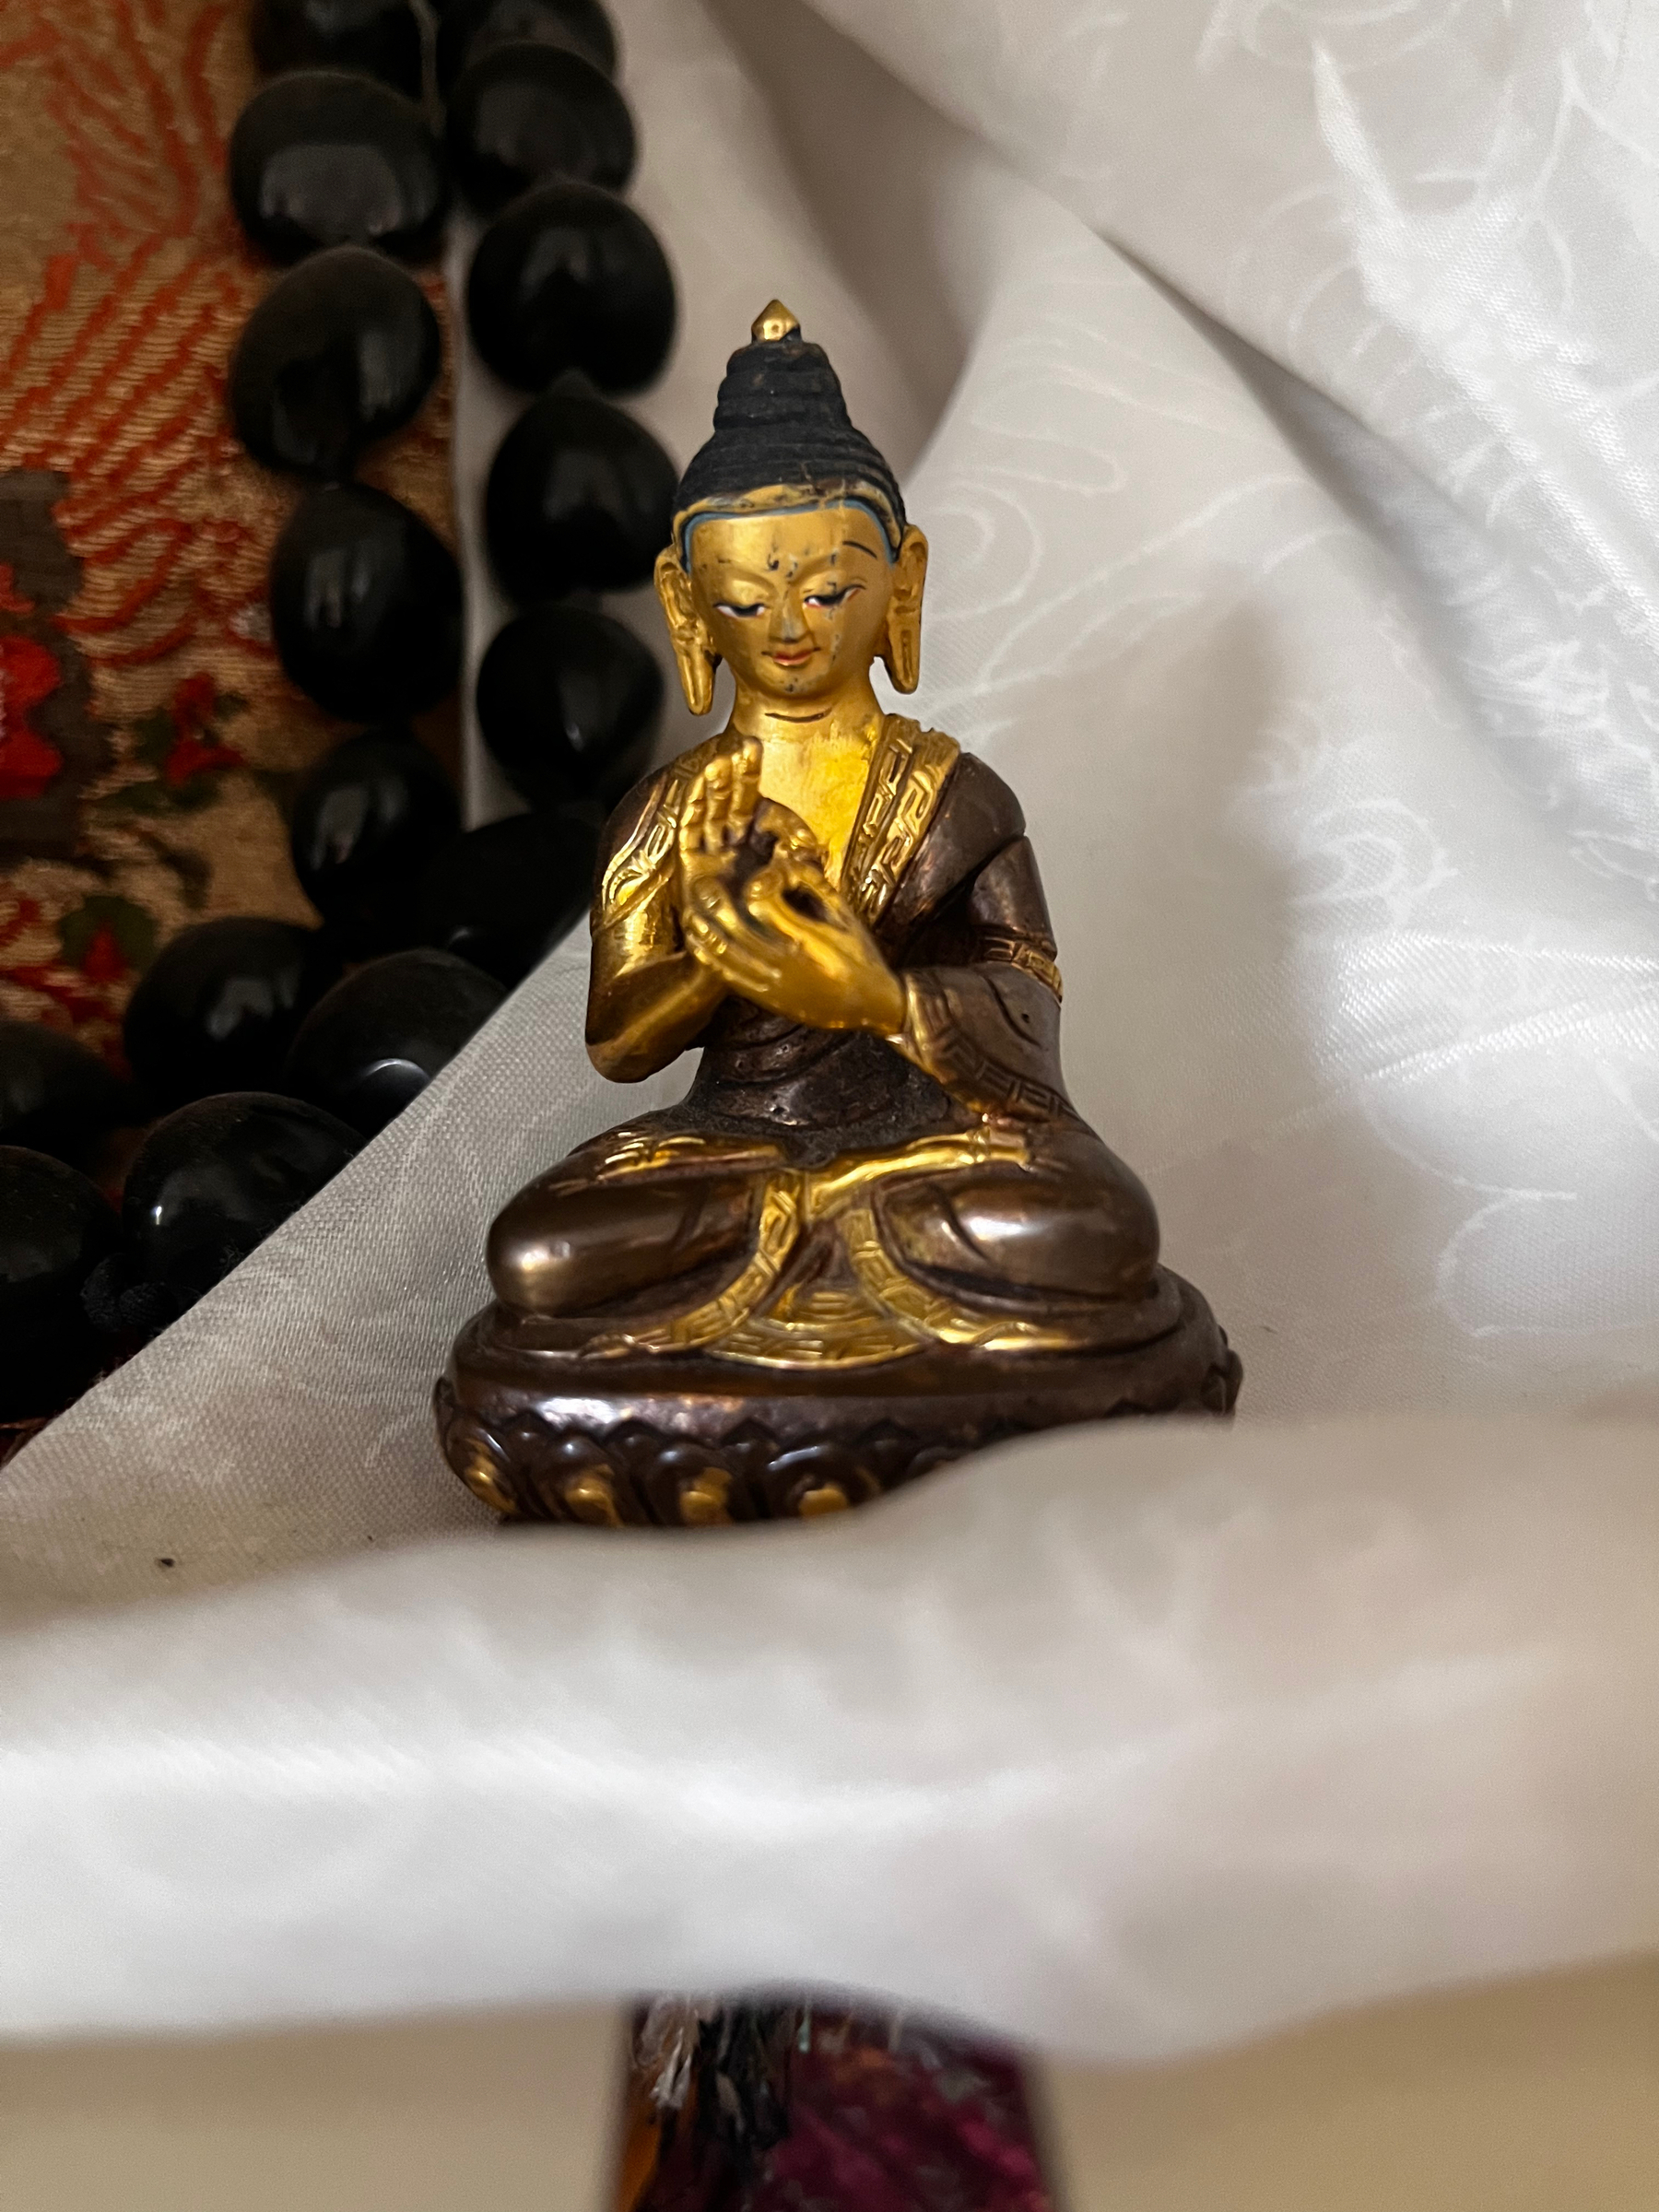 A small Buddha statue or rupa